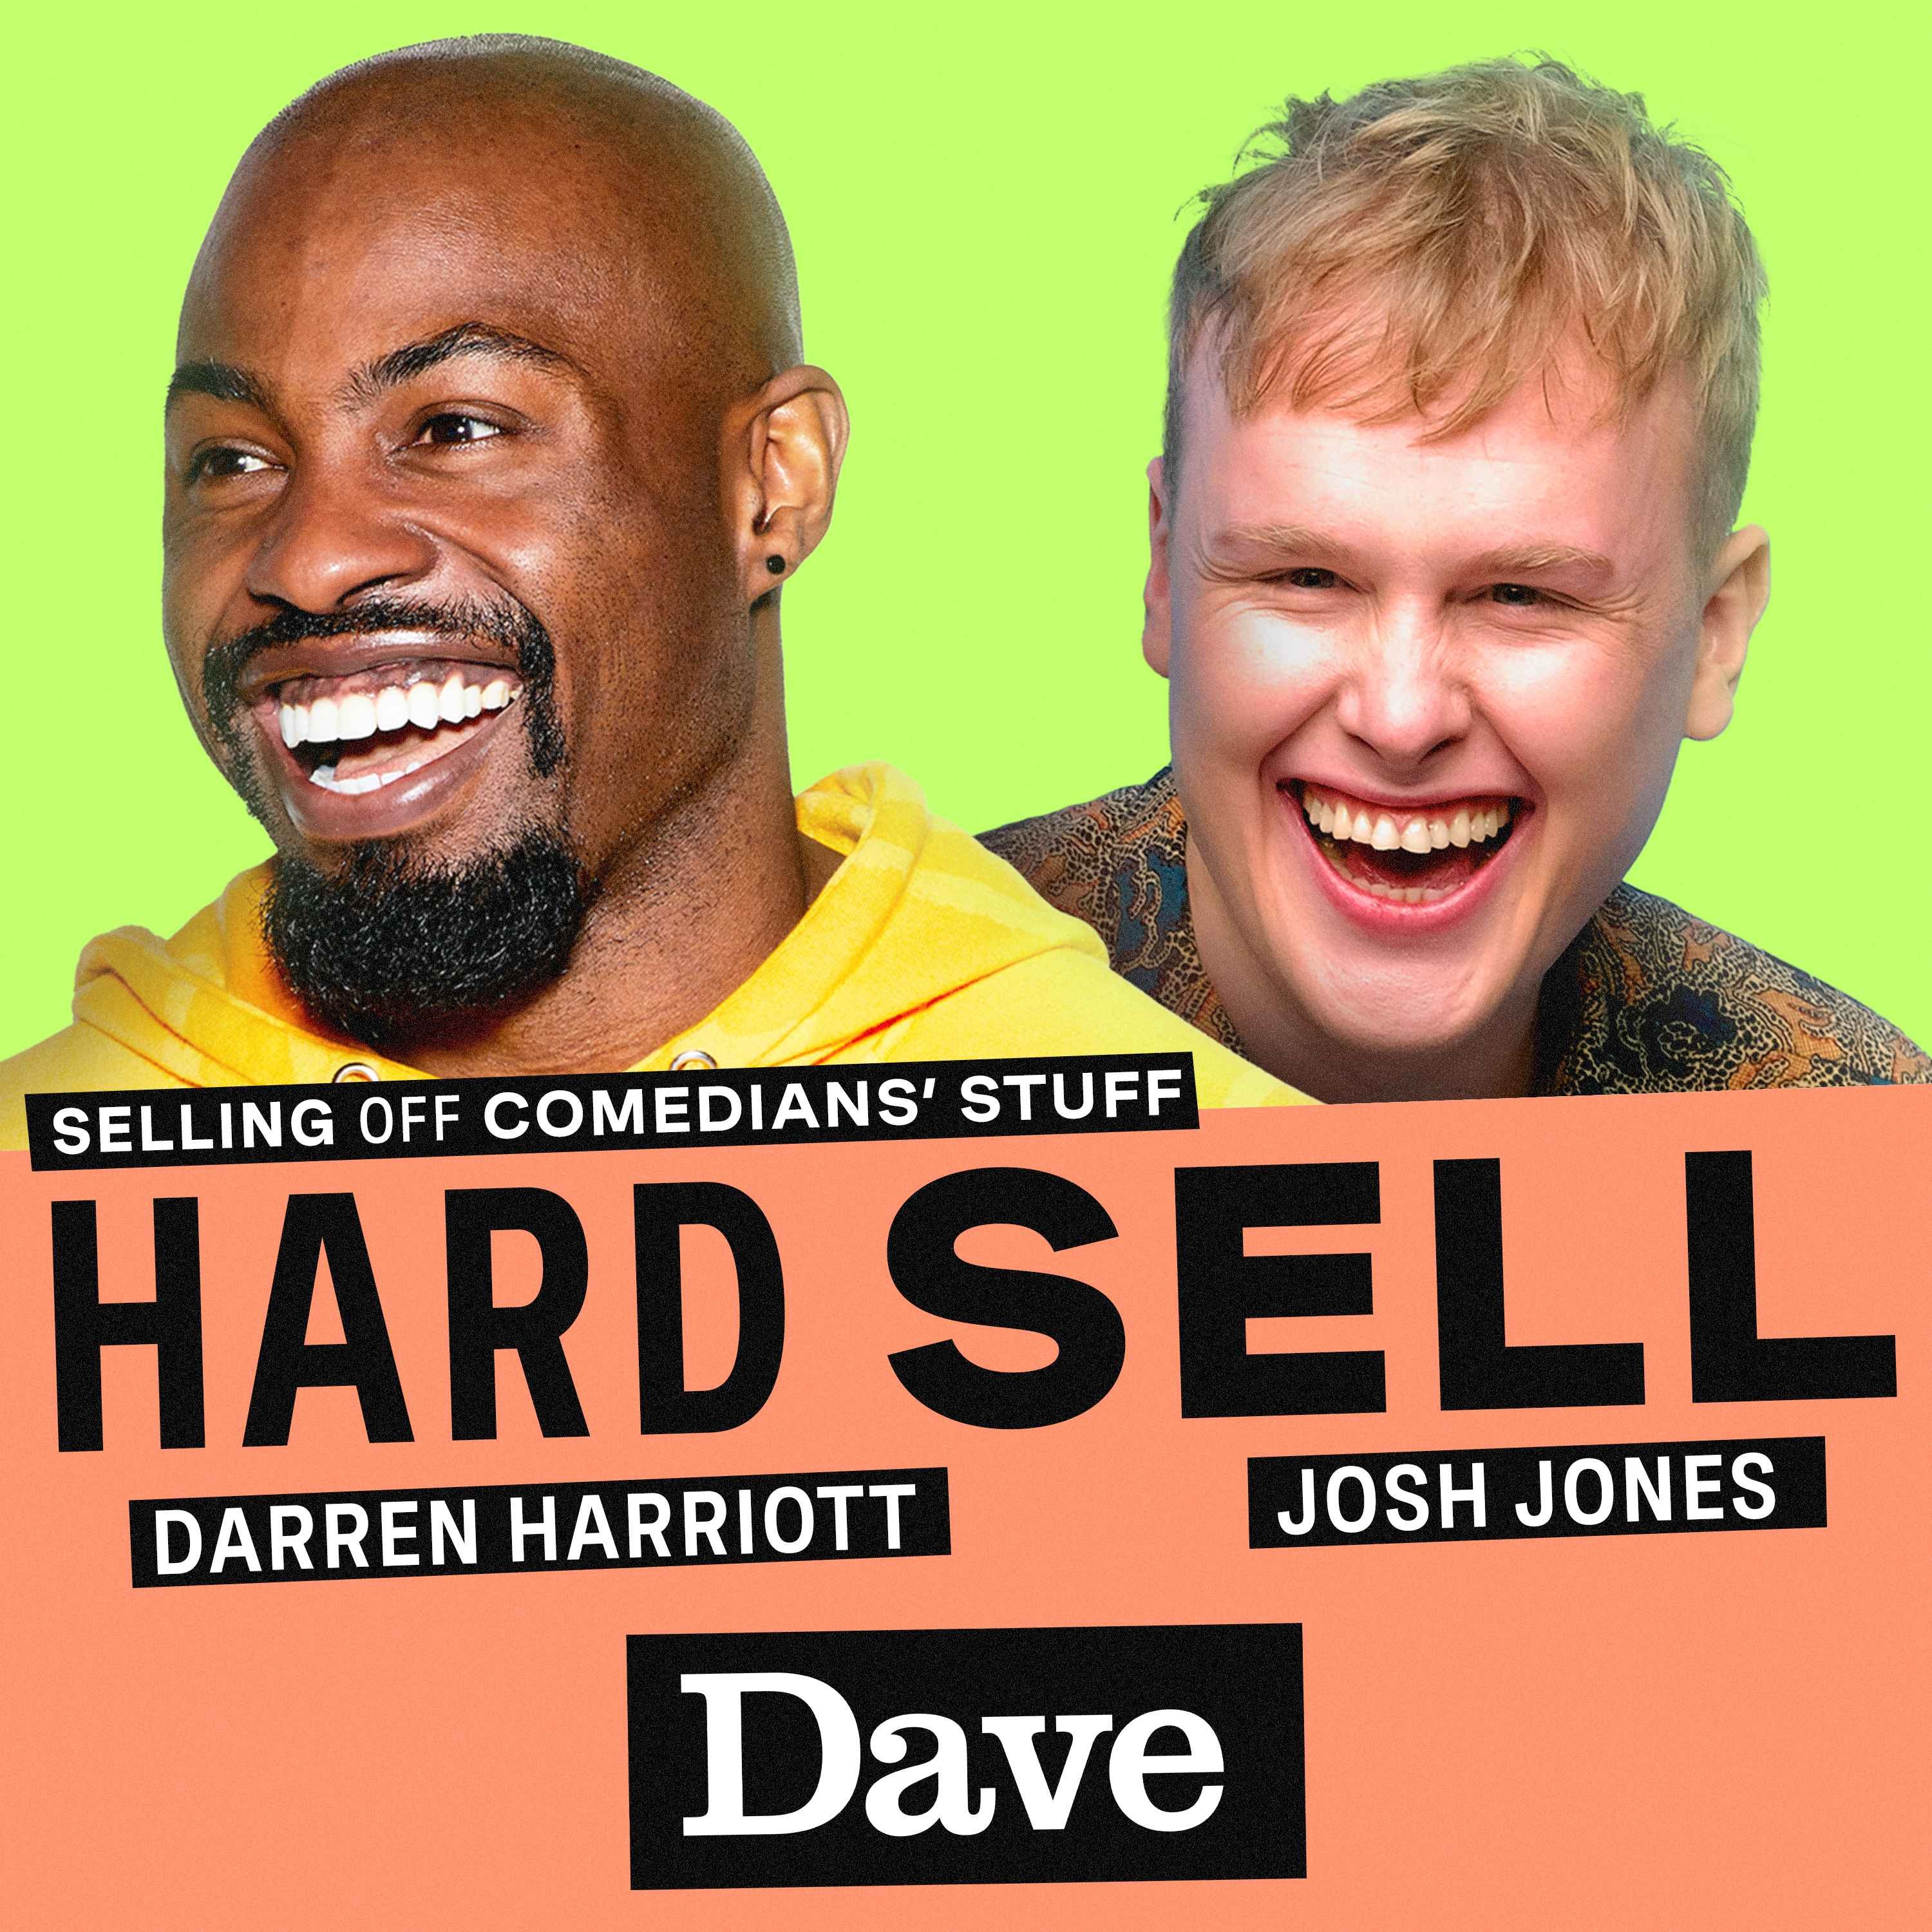 Hard Sell with Darren Harriott and Josh Jones podcast show image